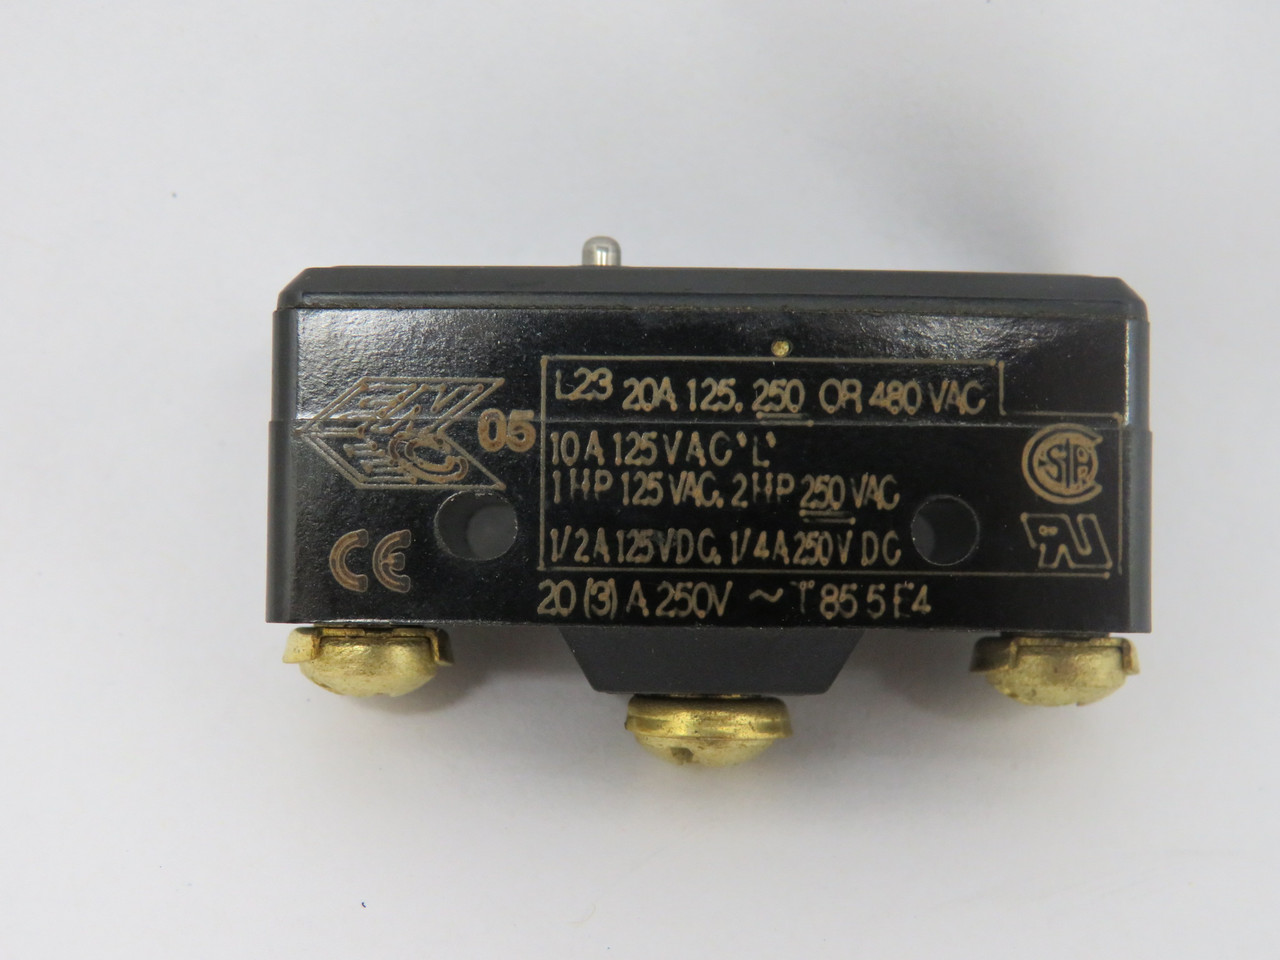 Microswitch BA-2R62-A4 Limit Switch 20A 125/250/480VAC 10A 125VAC 1HP 125AC USED